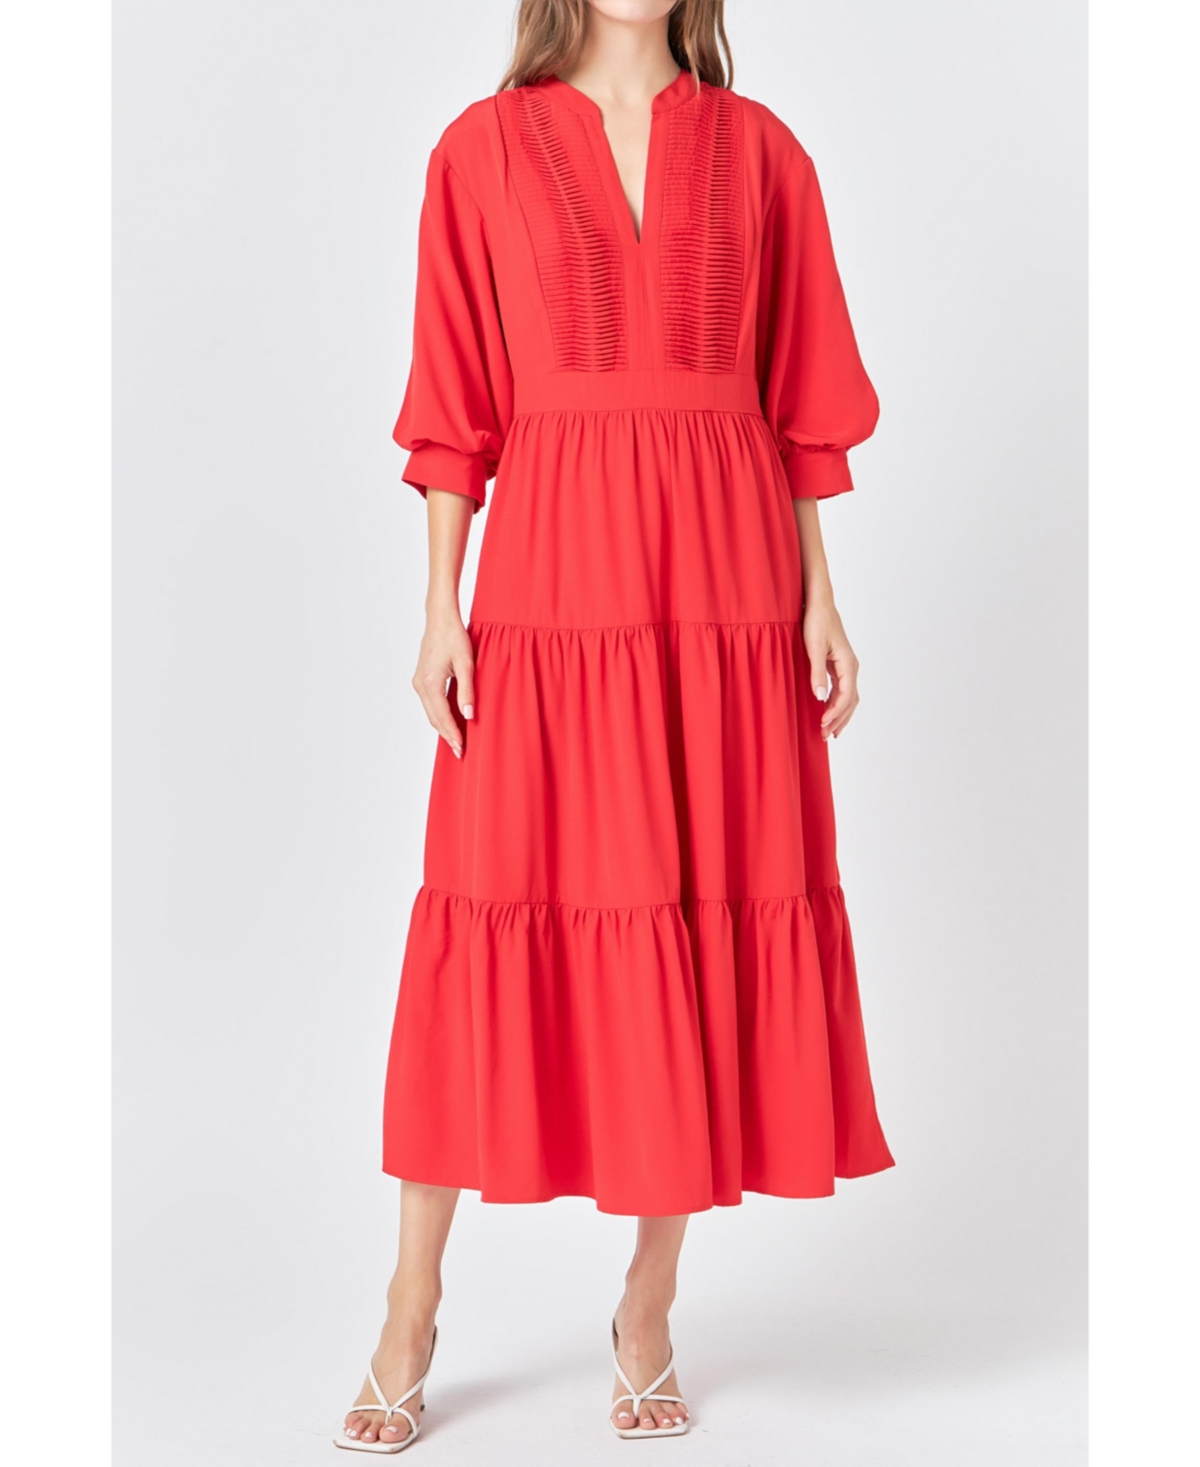 Women's Pin Tuck Dress - Red